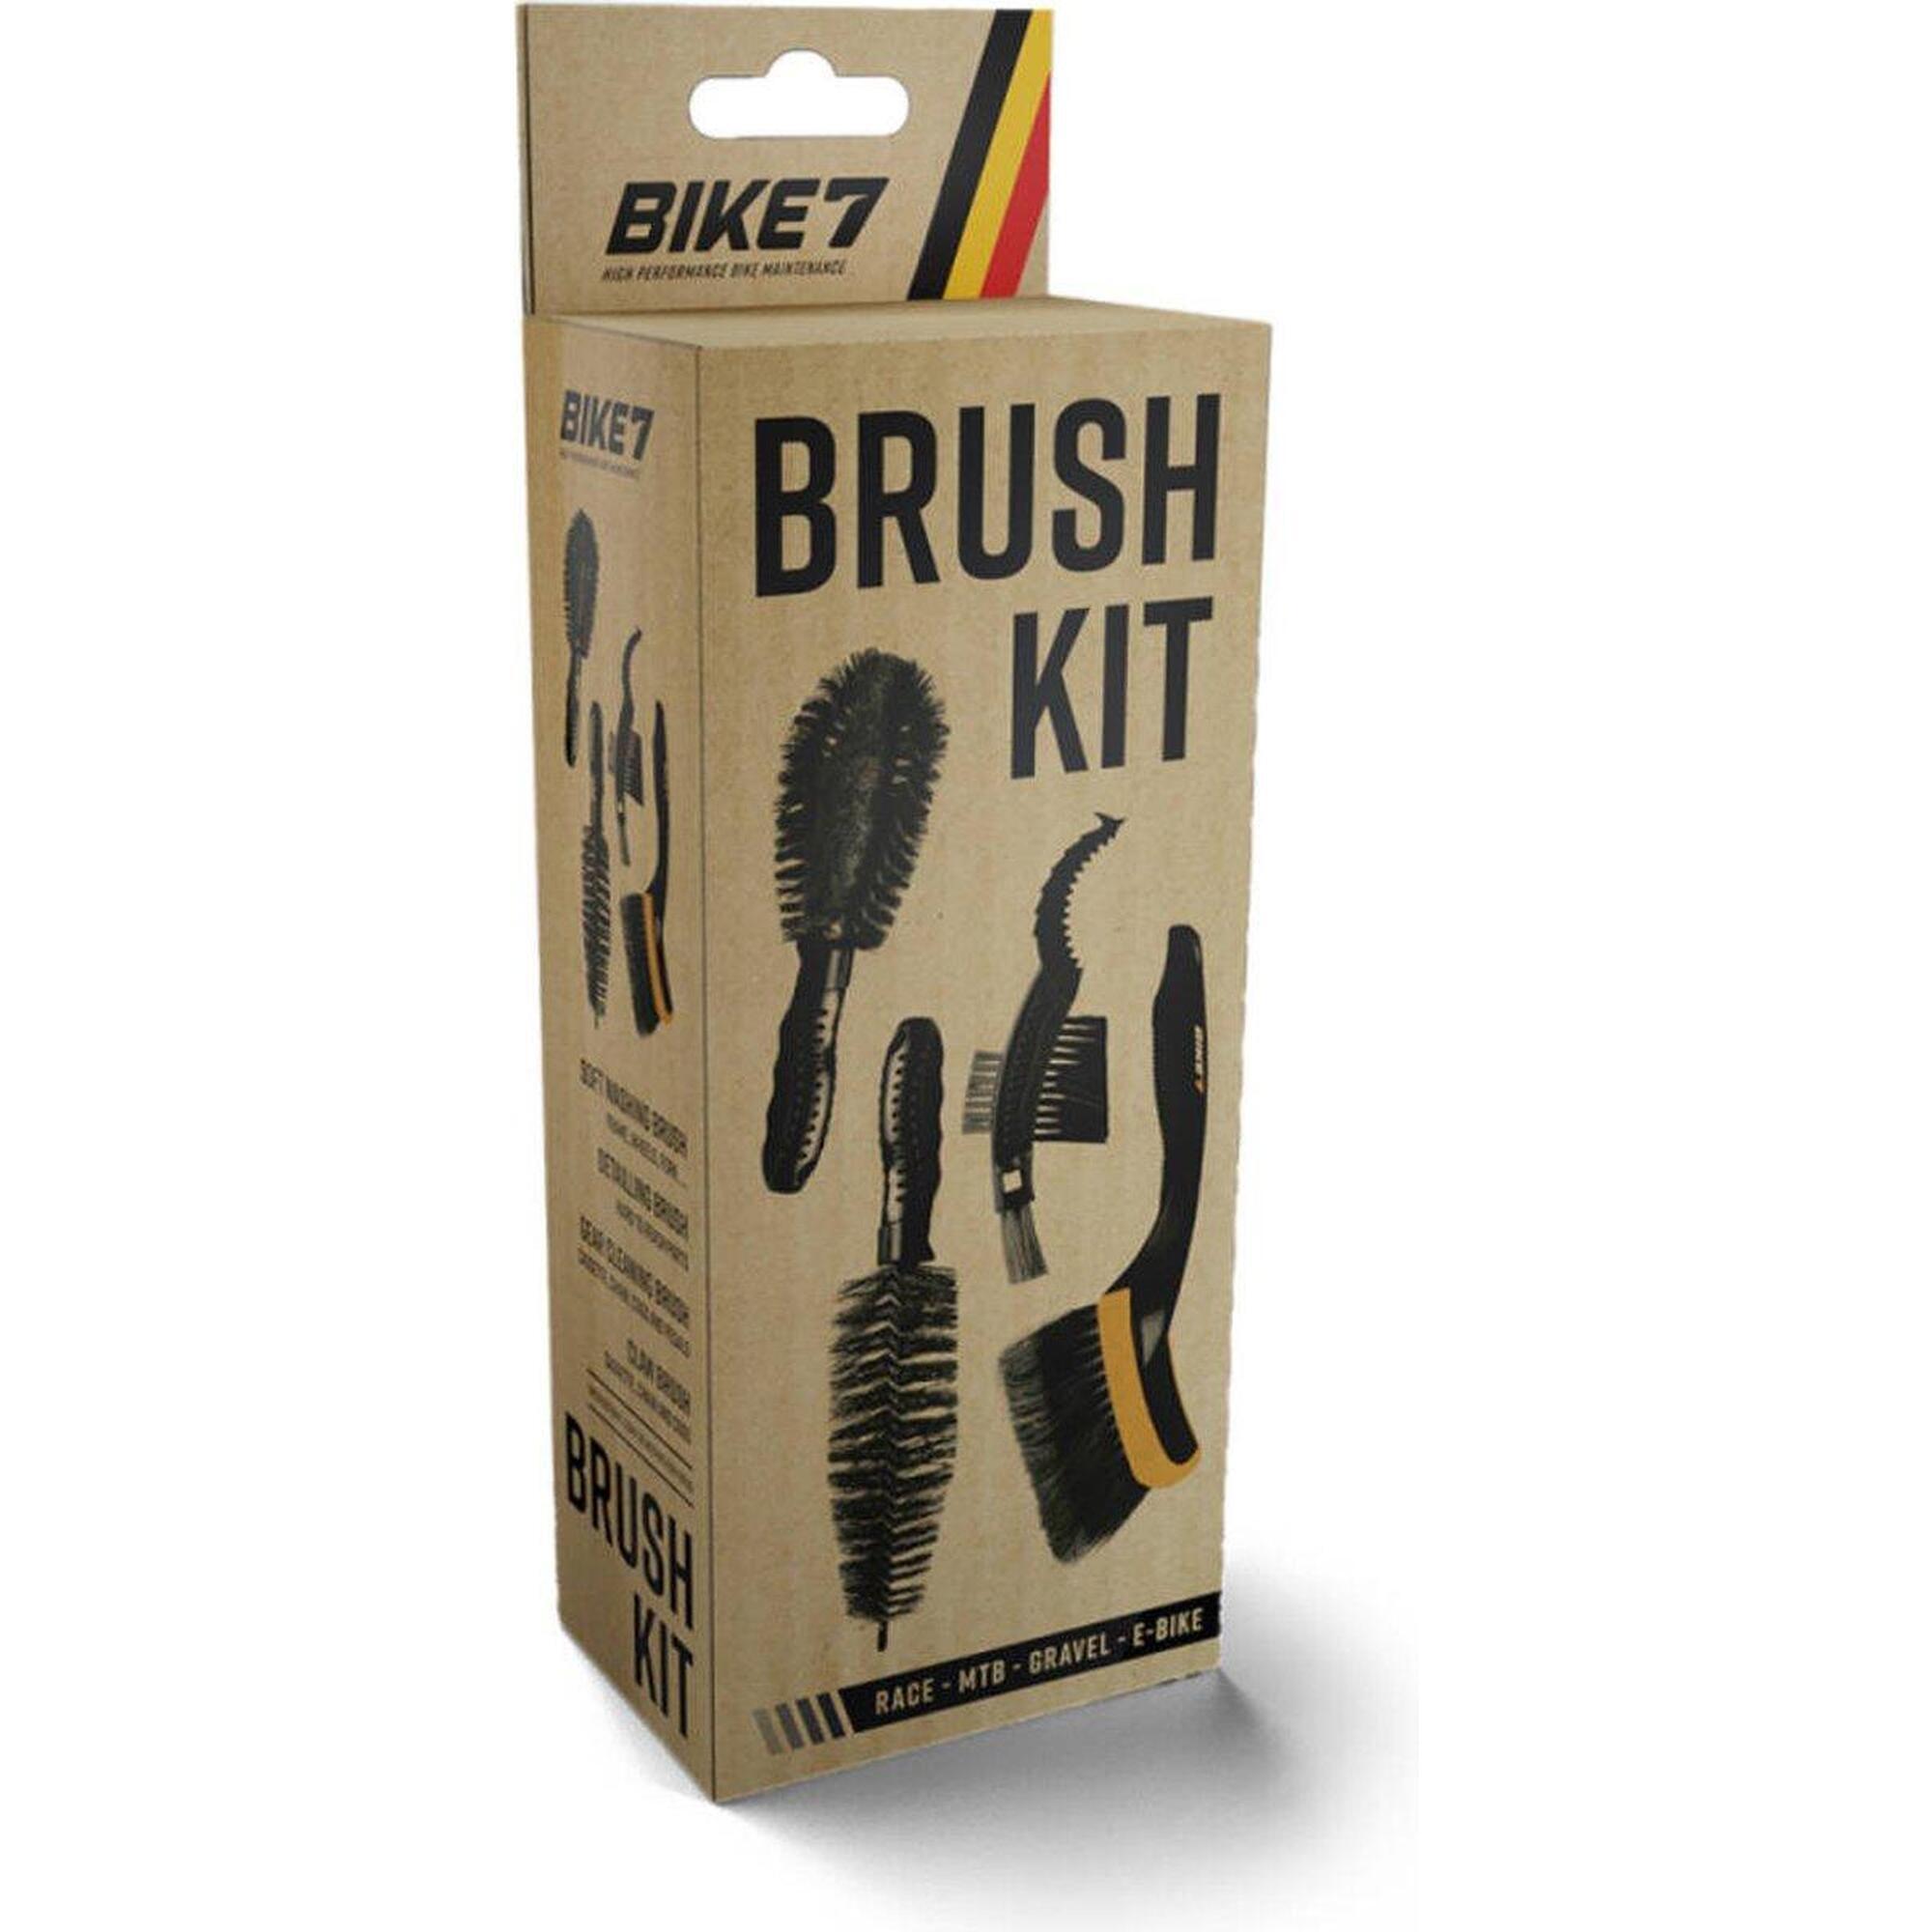 Fietsaccessoires deep cleaning alle soorten - Bike7 Brush Kit 4 items